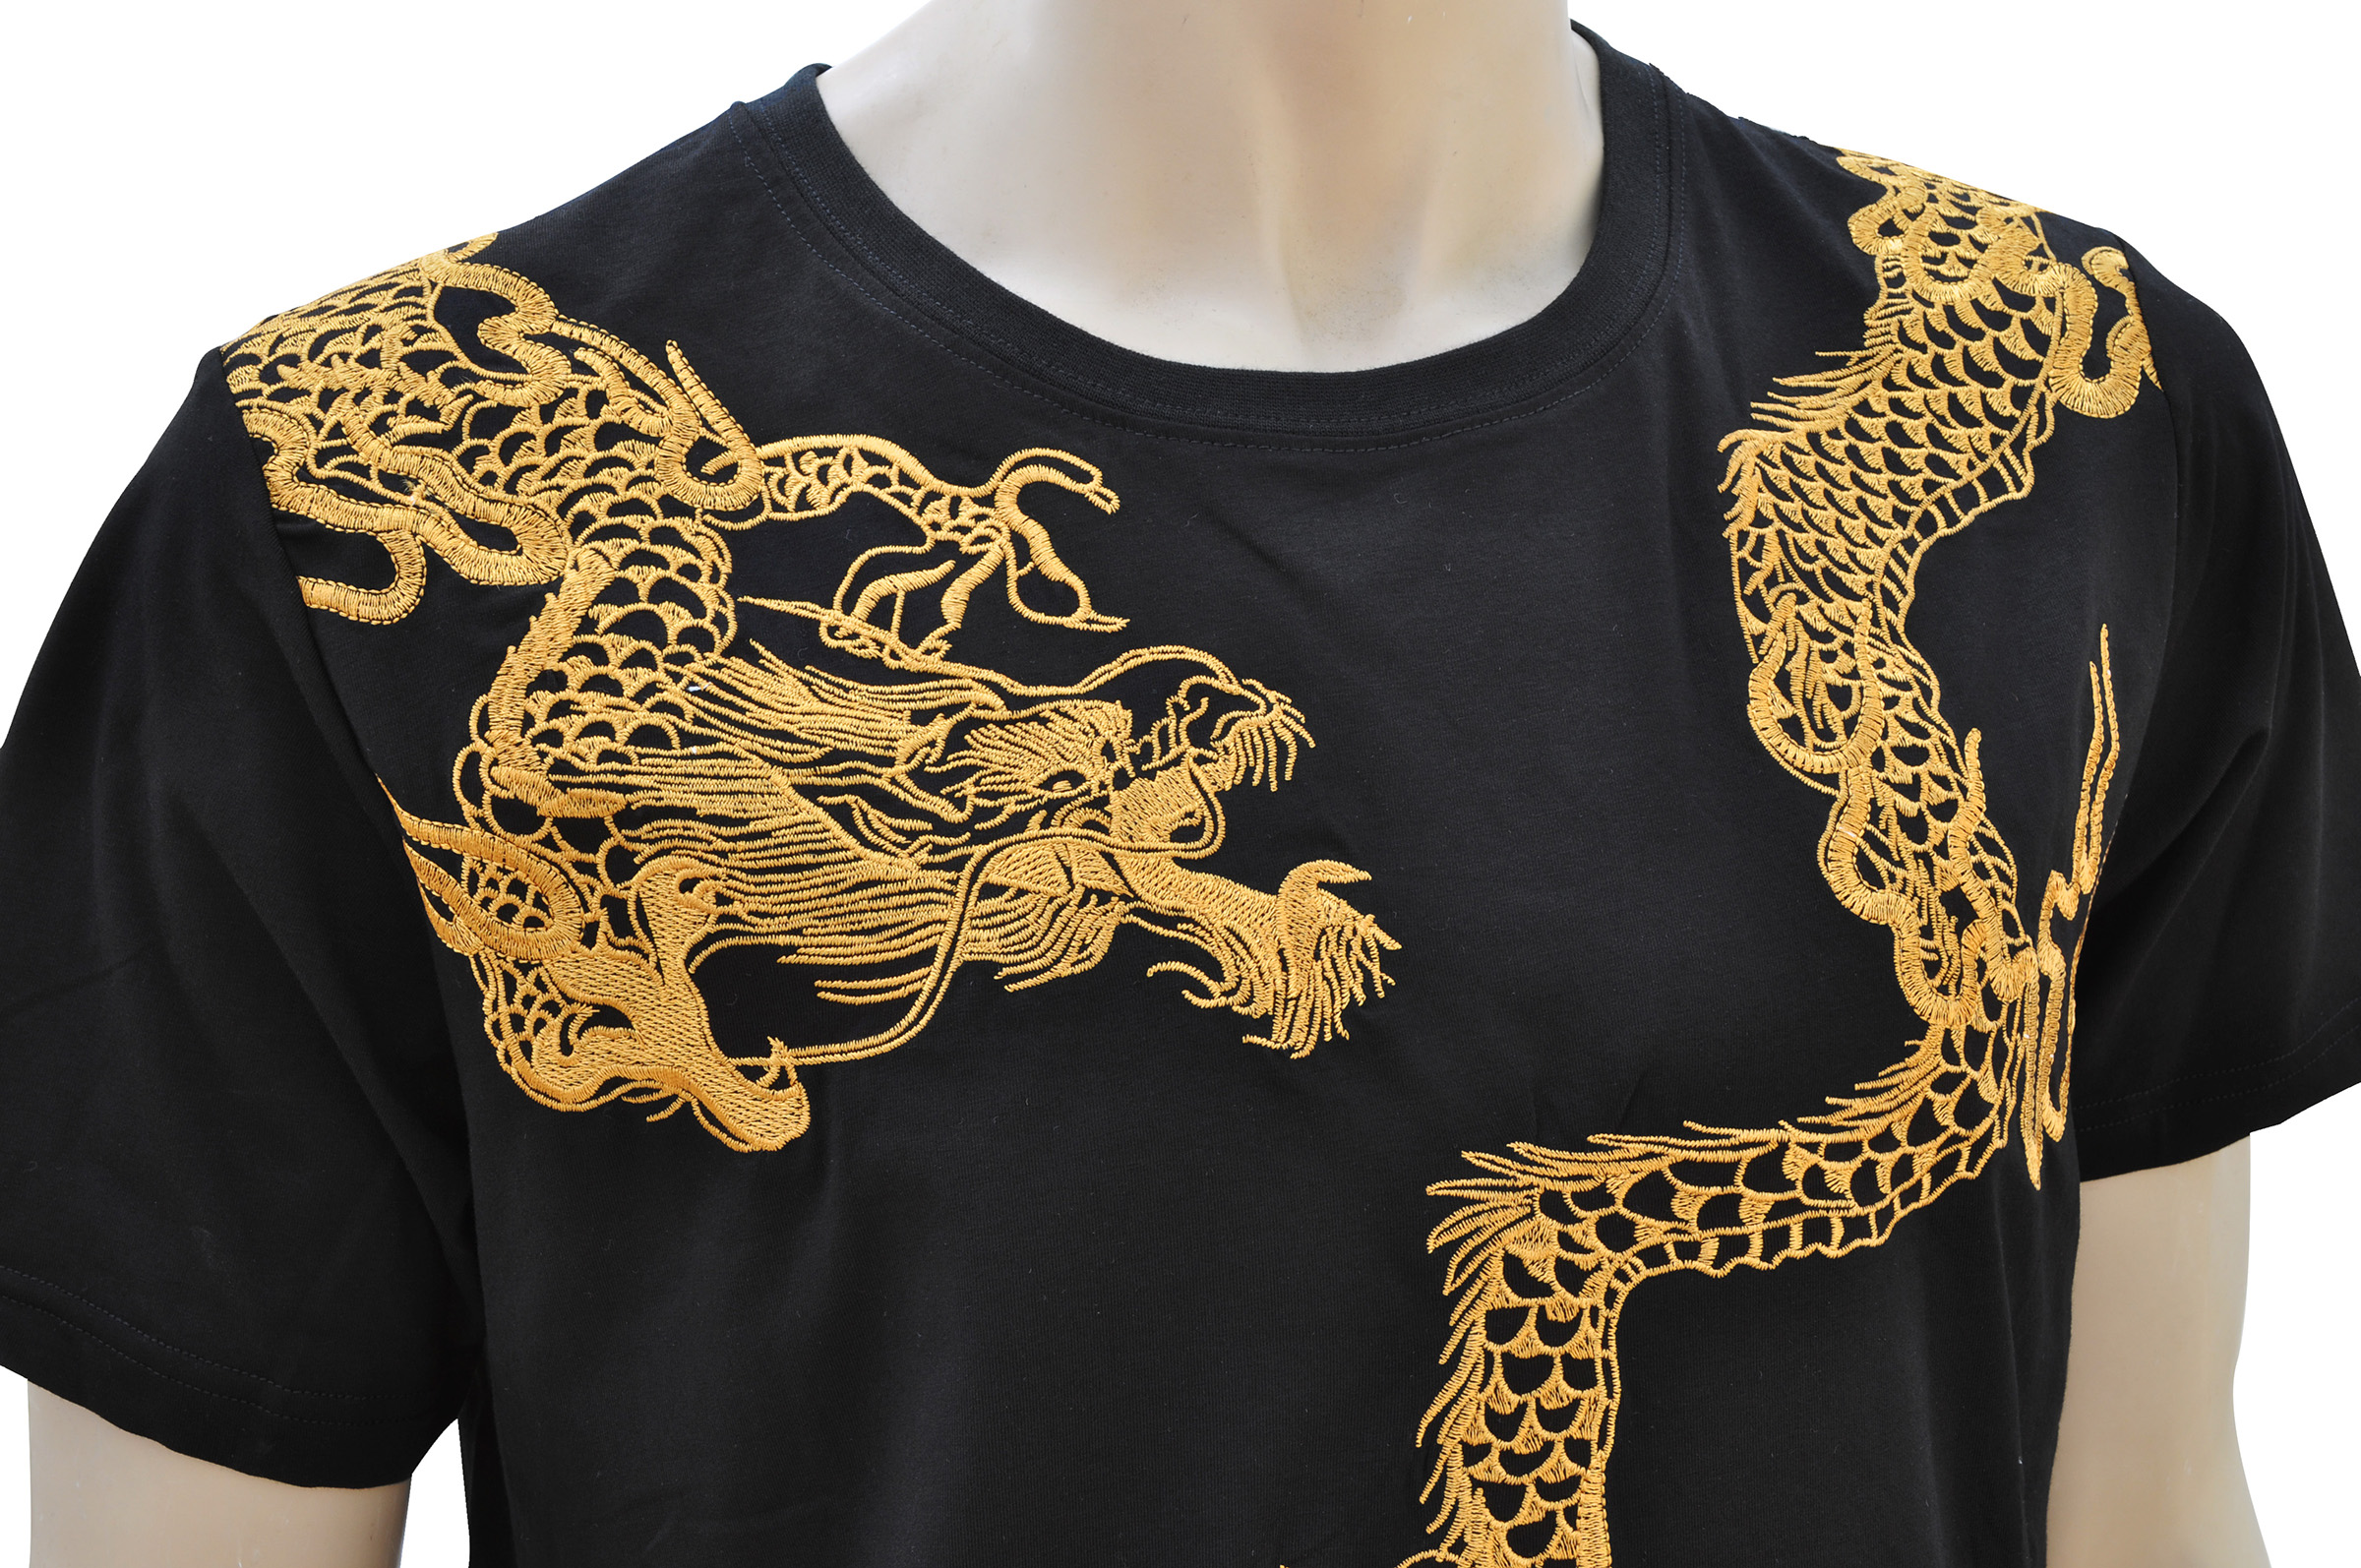 spyro the dragon t-shirt